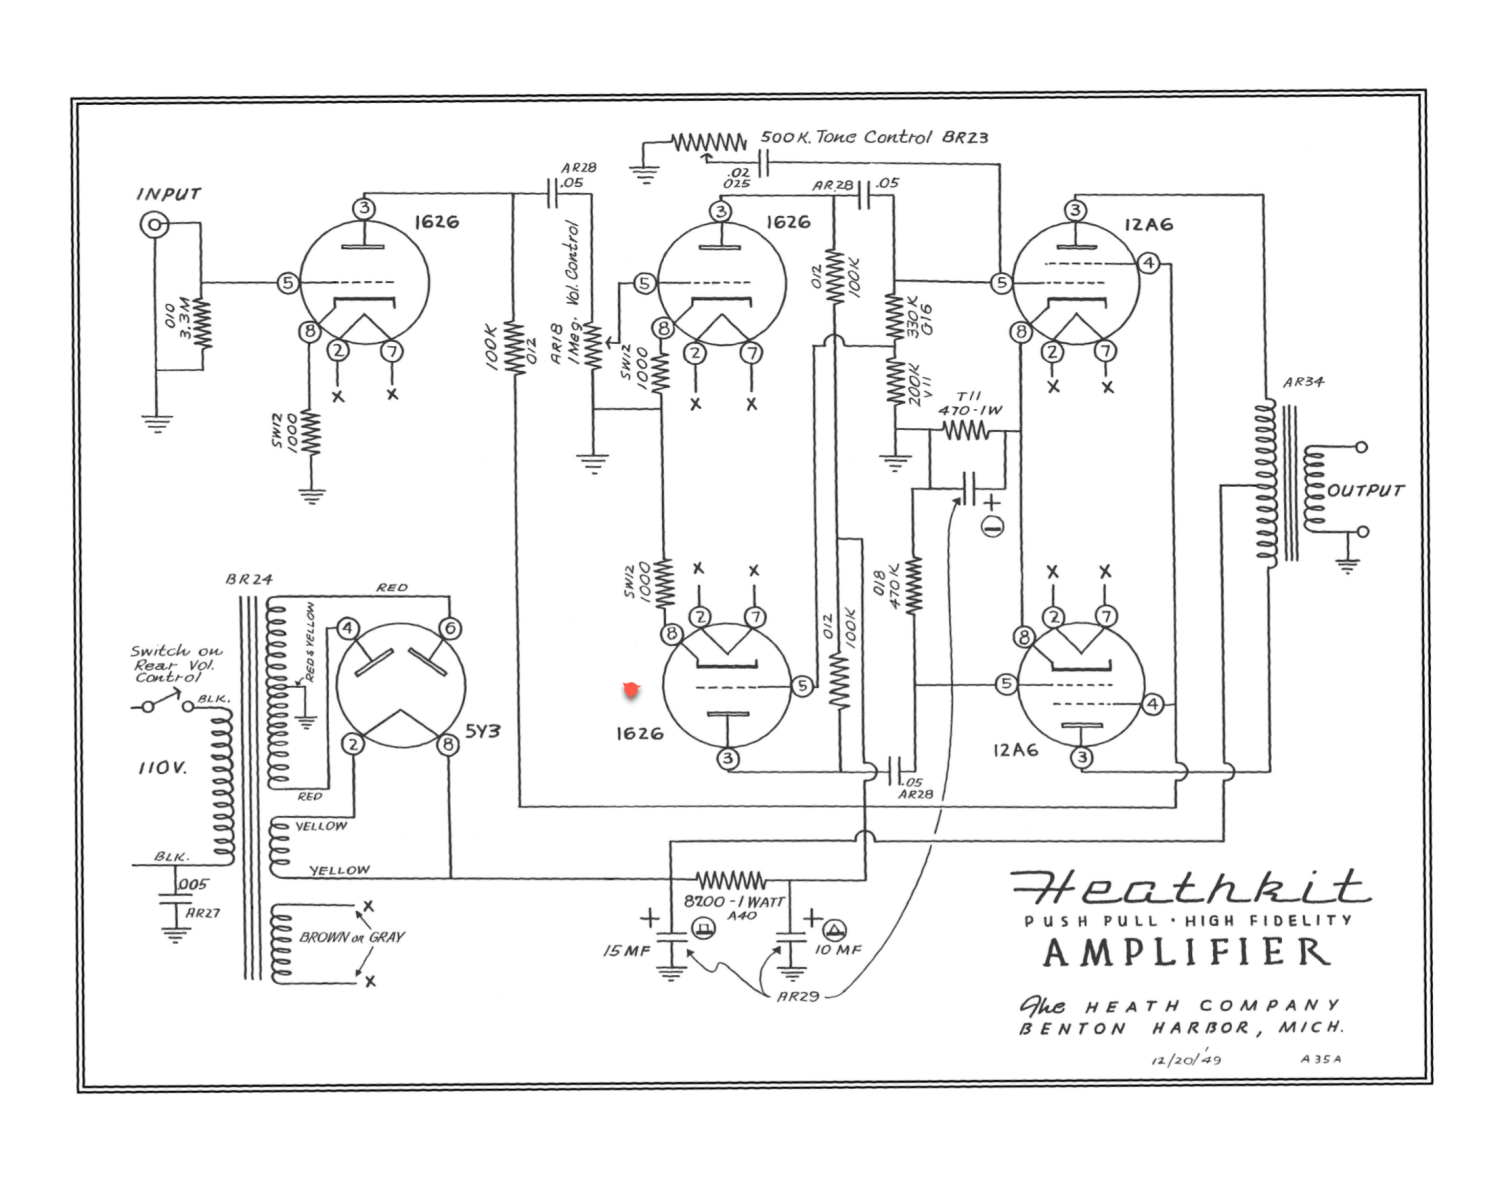 Heathkit A-4 Push Pull HiFi Amplifier - Schematic